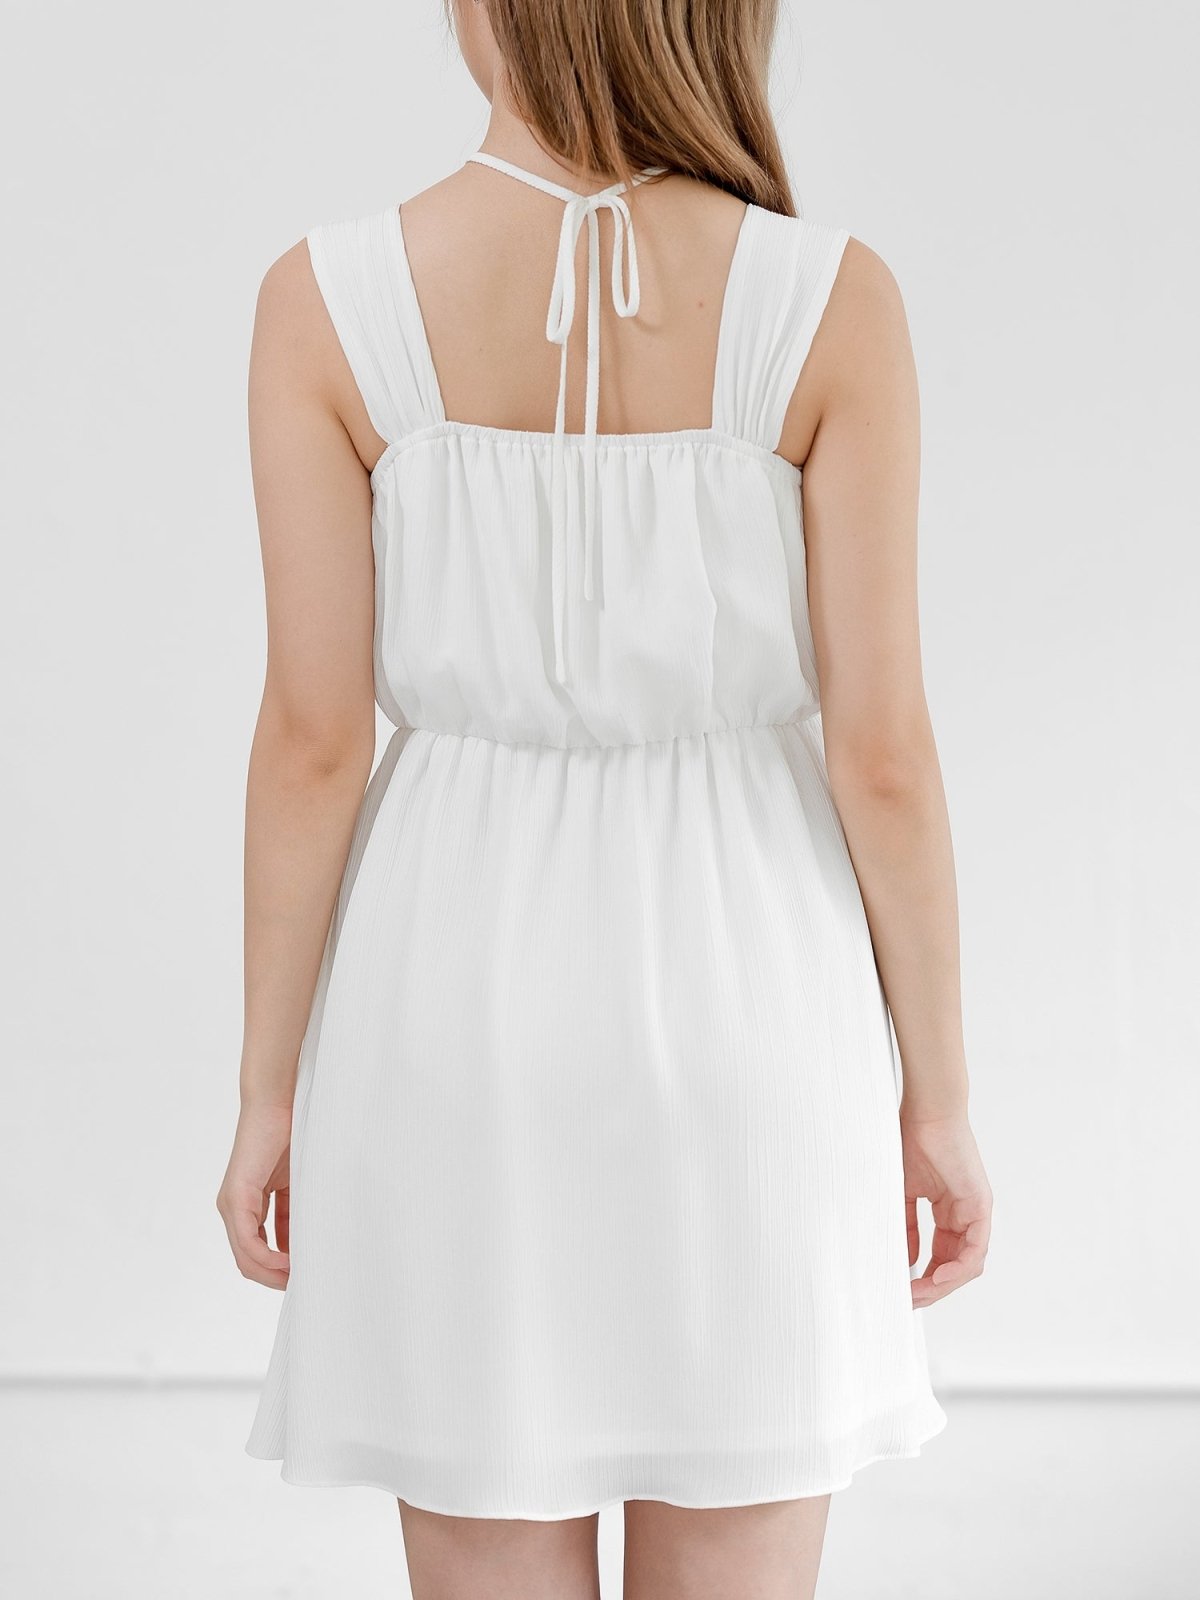 Juliet Halterneck Mini Dress - DAG-DD0836-23WhiteS - White - S - D'ZAGE Designs